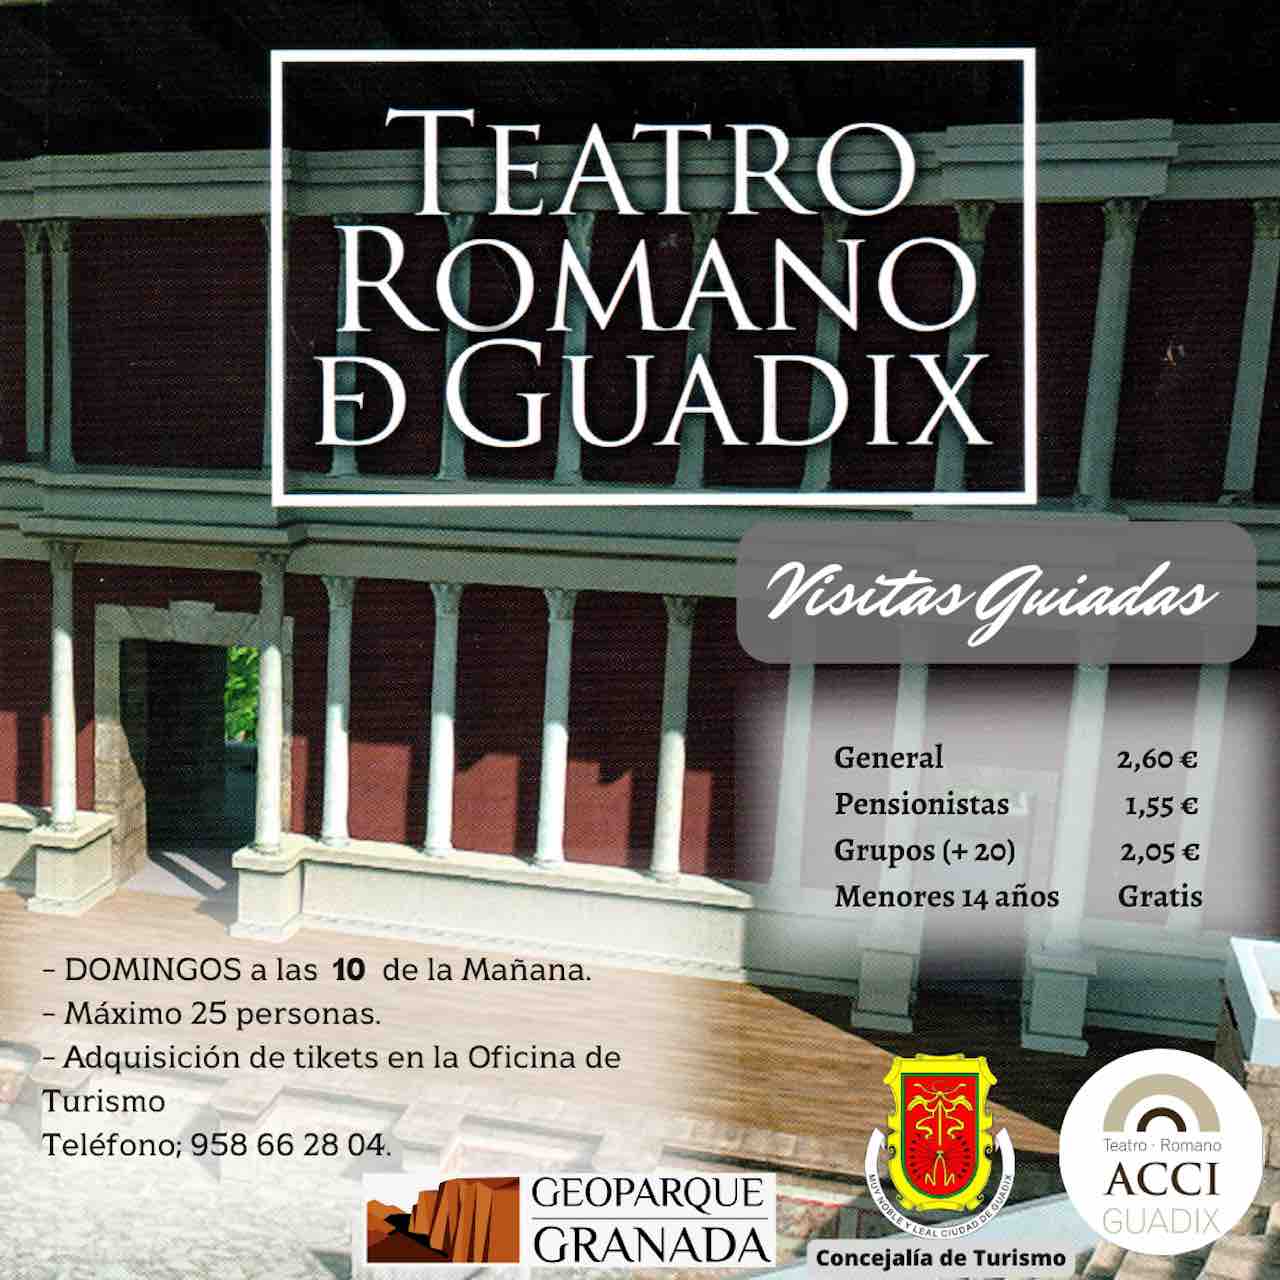 Teatro Romano Guadix tarifas